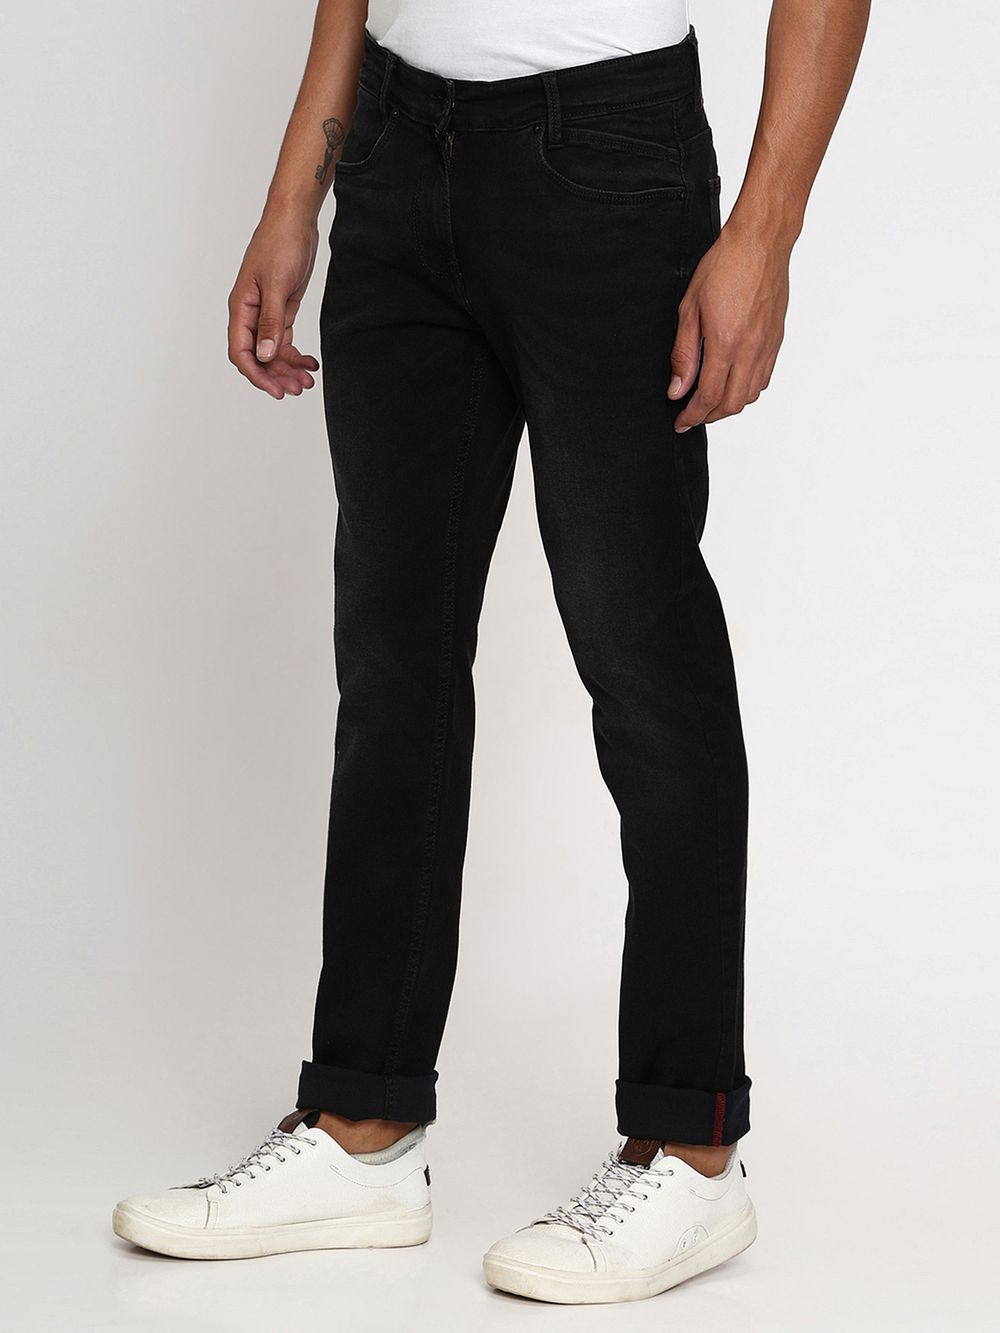 Black Narrow Fit Originals Stretch Jeans